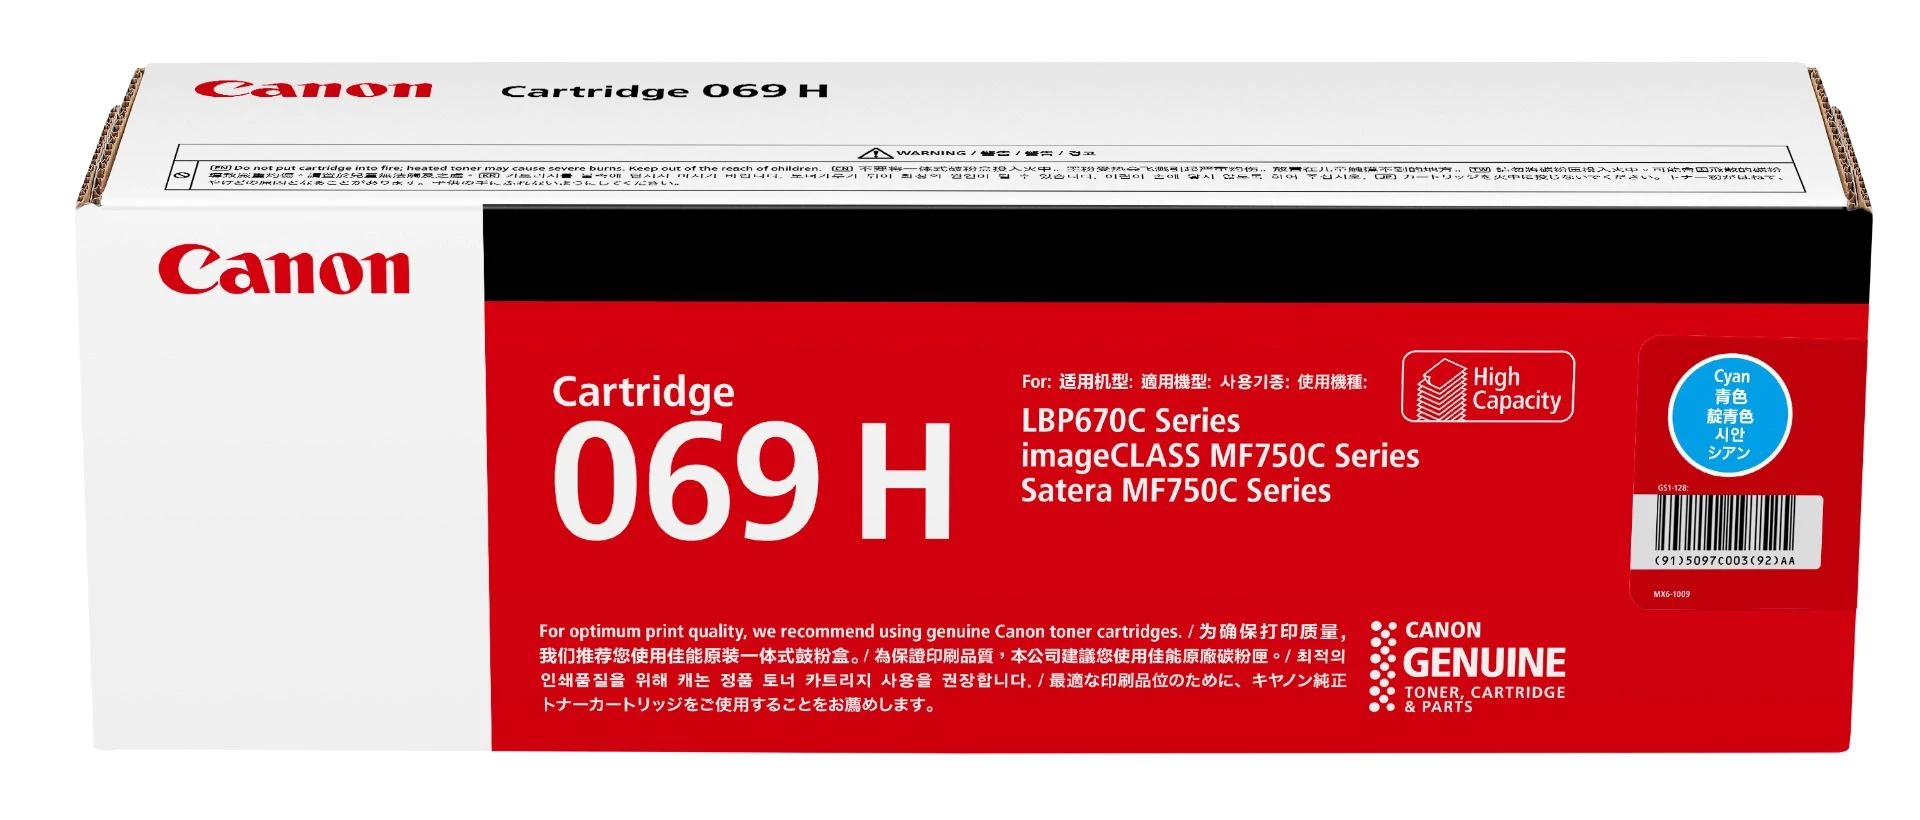 Canon Cartridge 069H CY 靛藍色碳粉盒 (高容量)